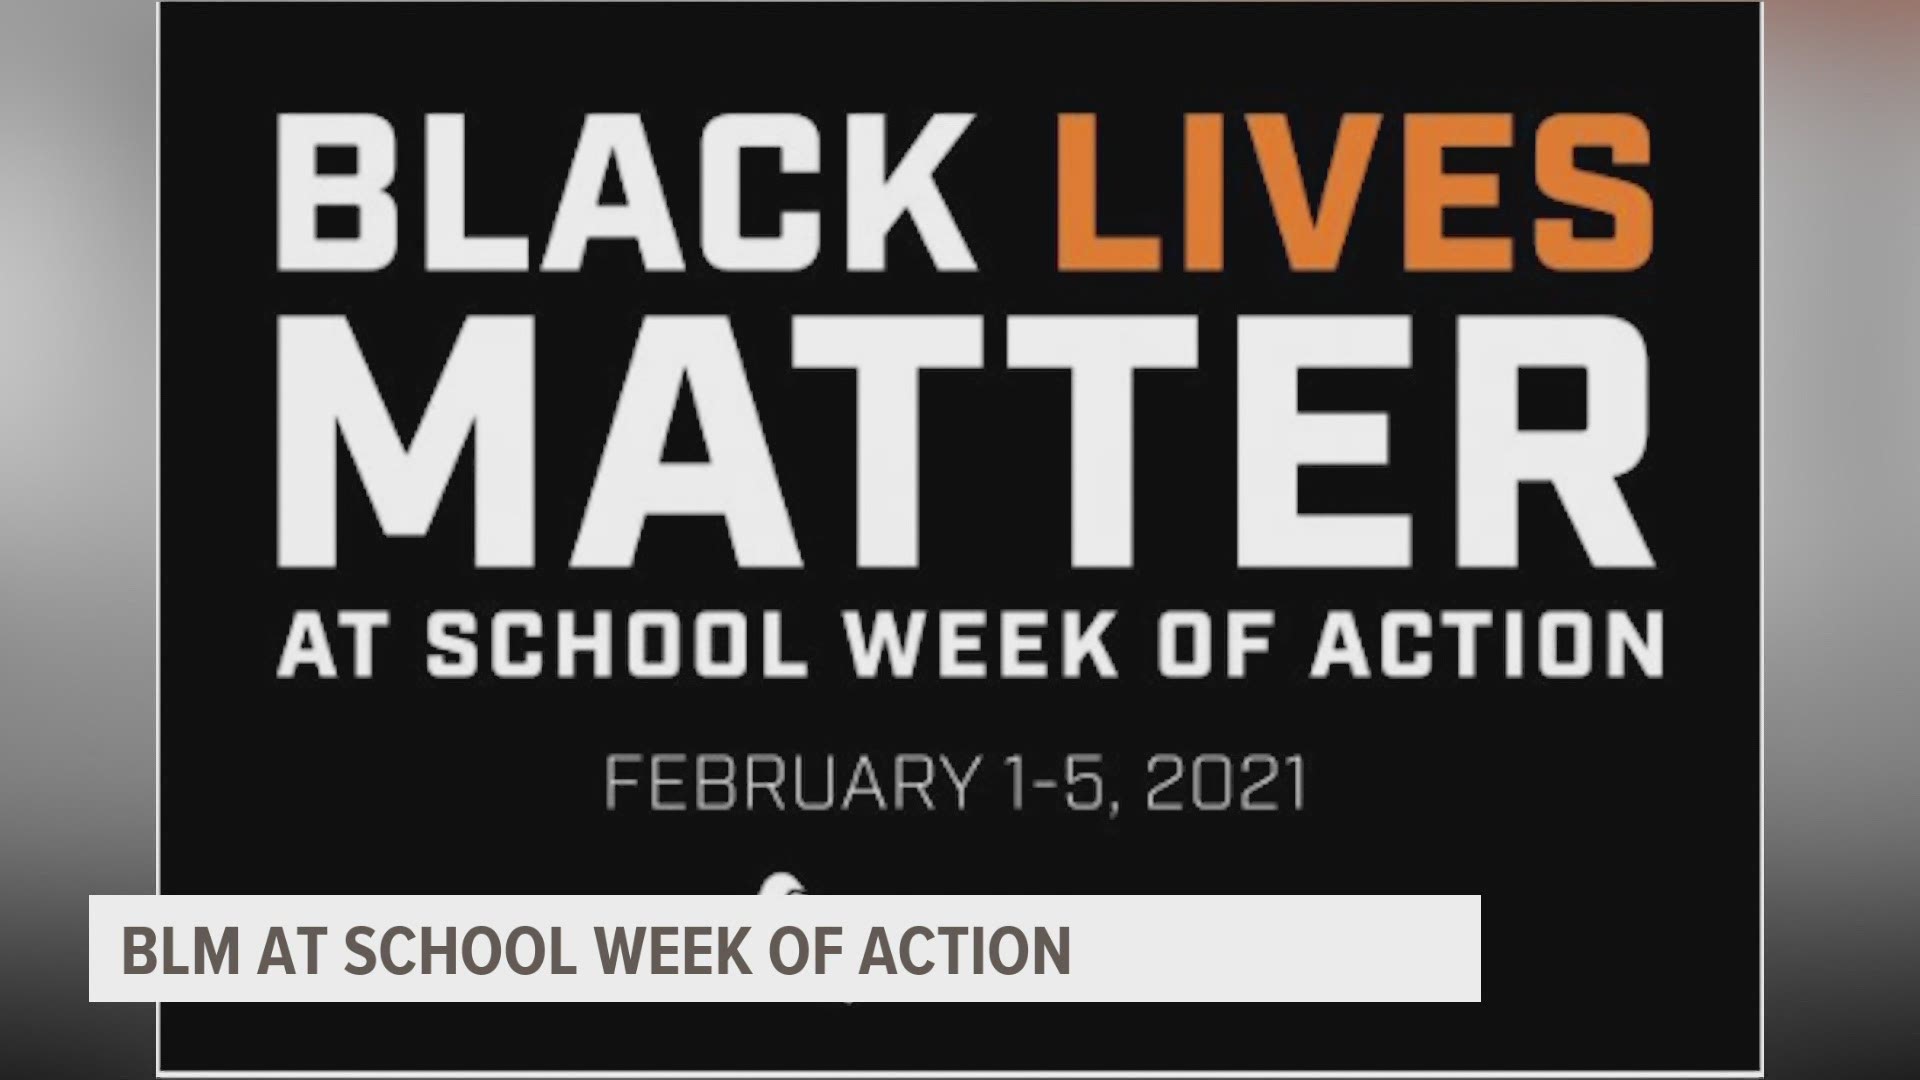 Black Lives Matter message belongs in our schools